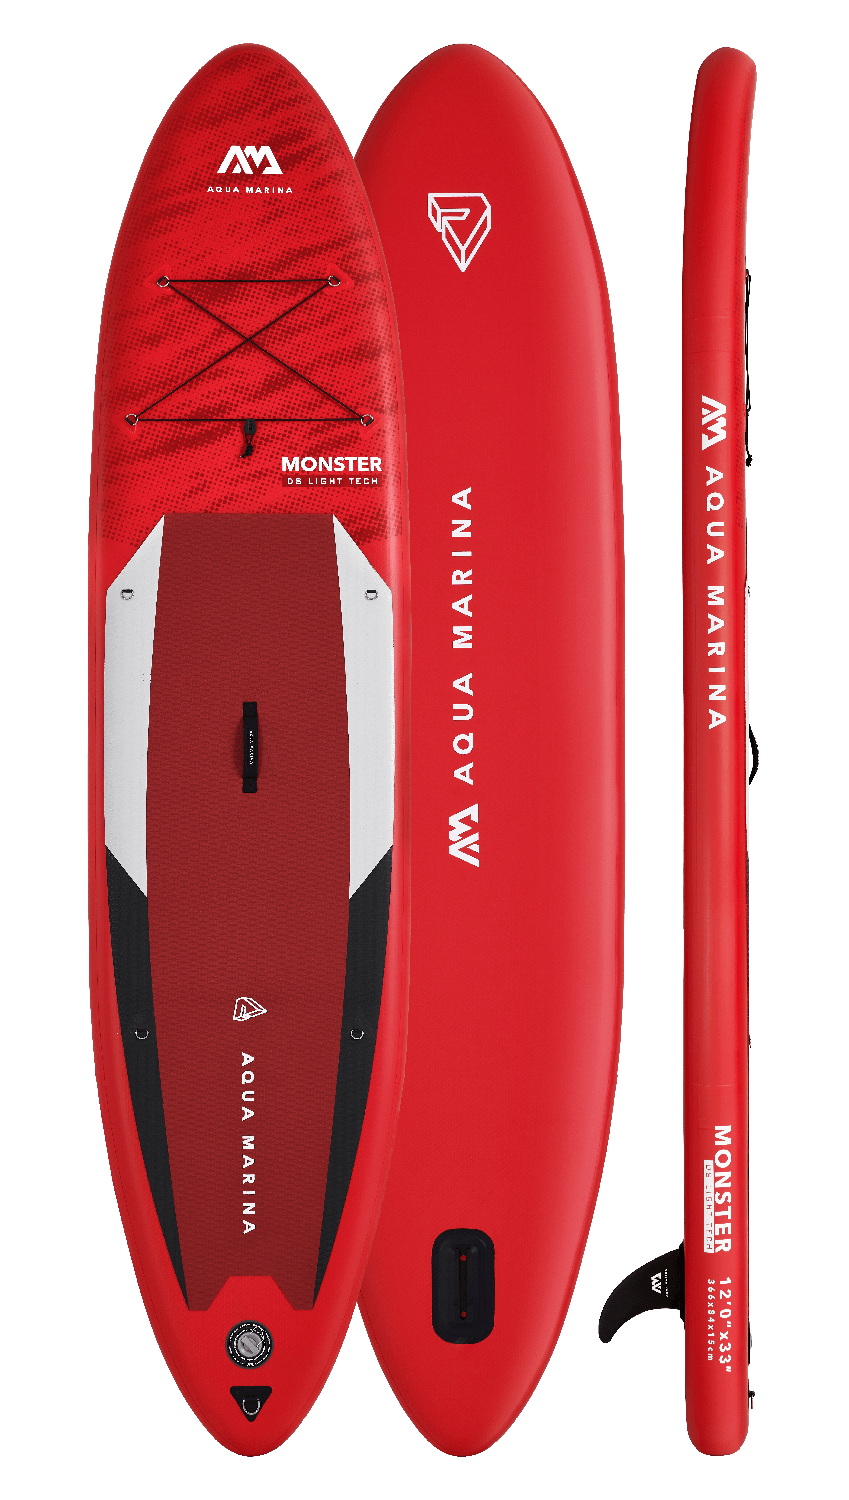 Aqua Marina 12’ Monster Inflatable SUP